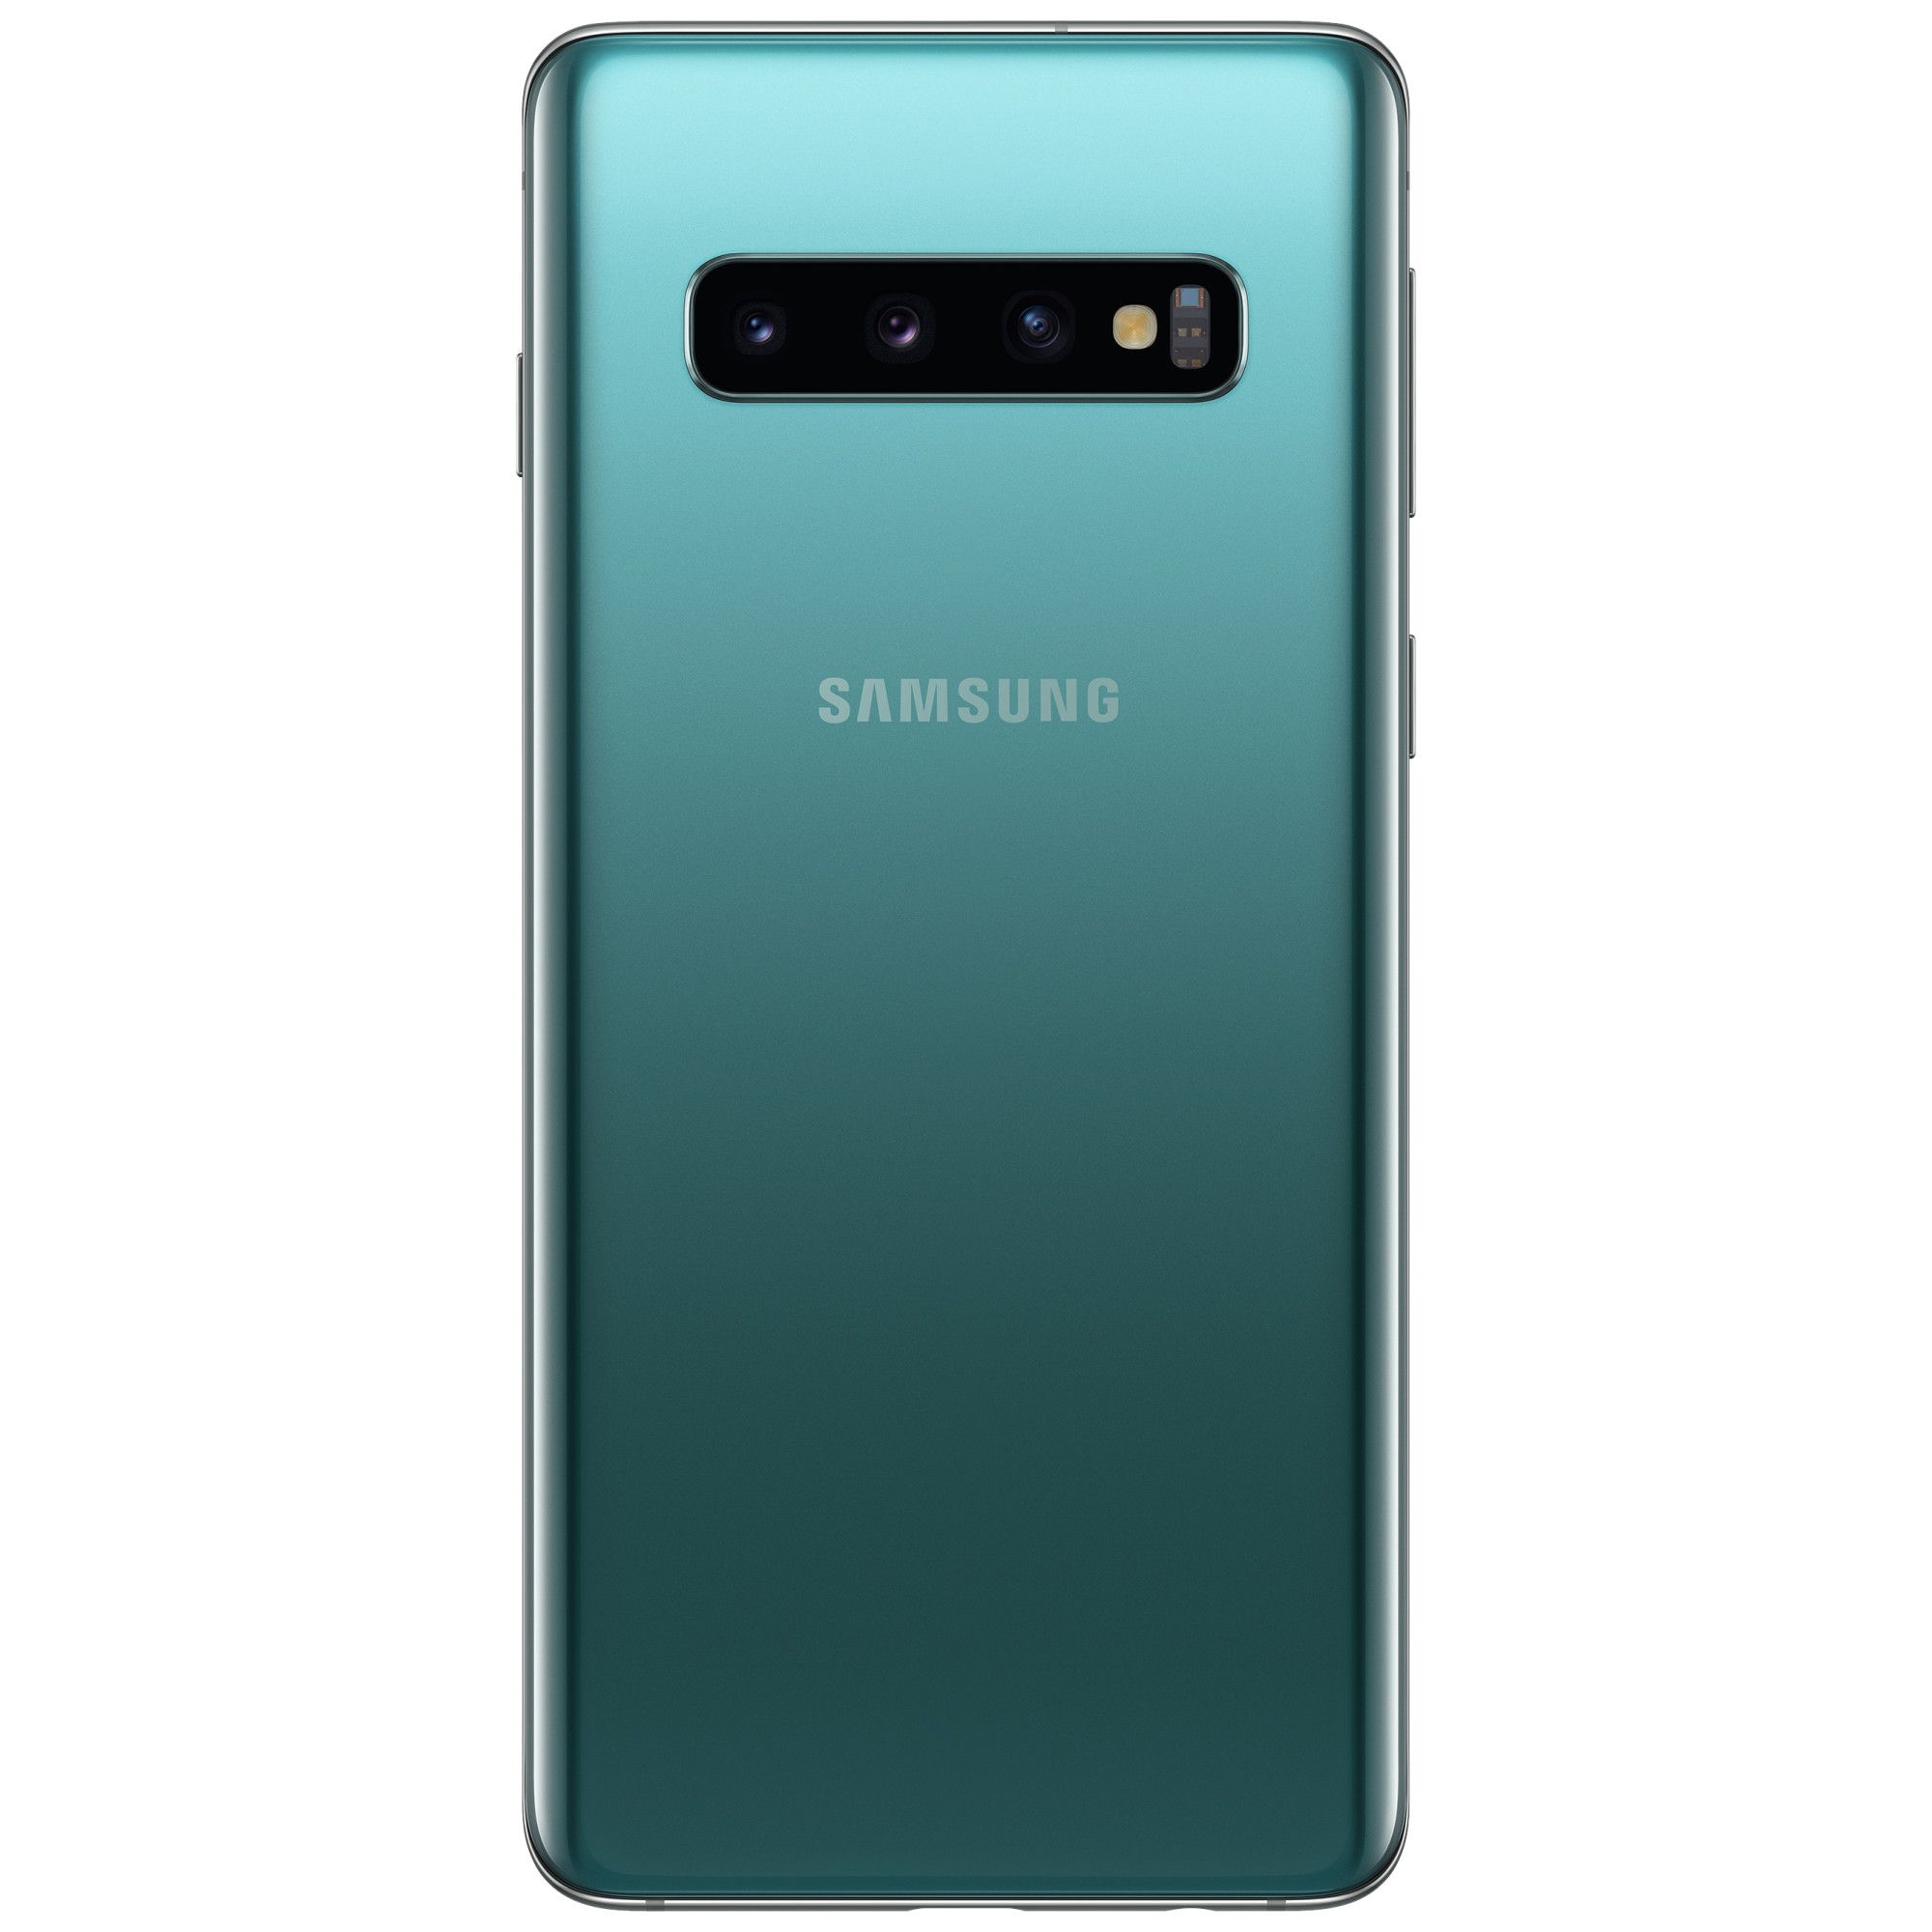 Samsung Galaxy S10 Test